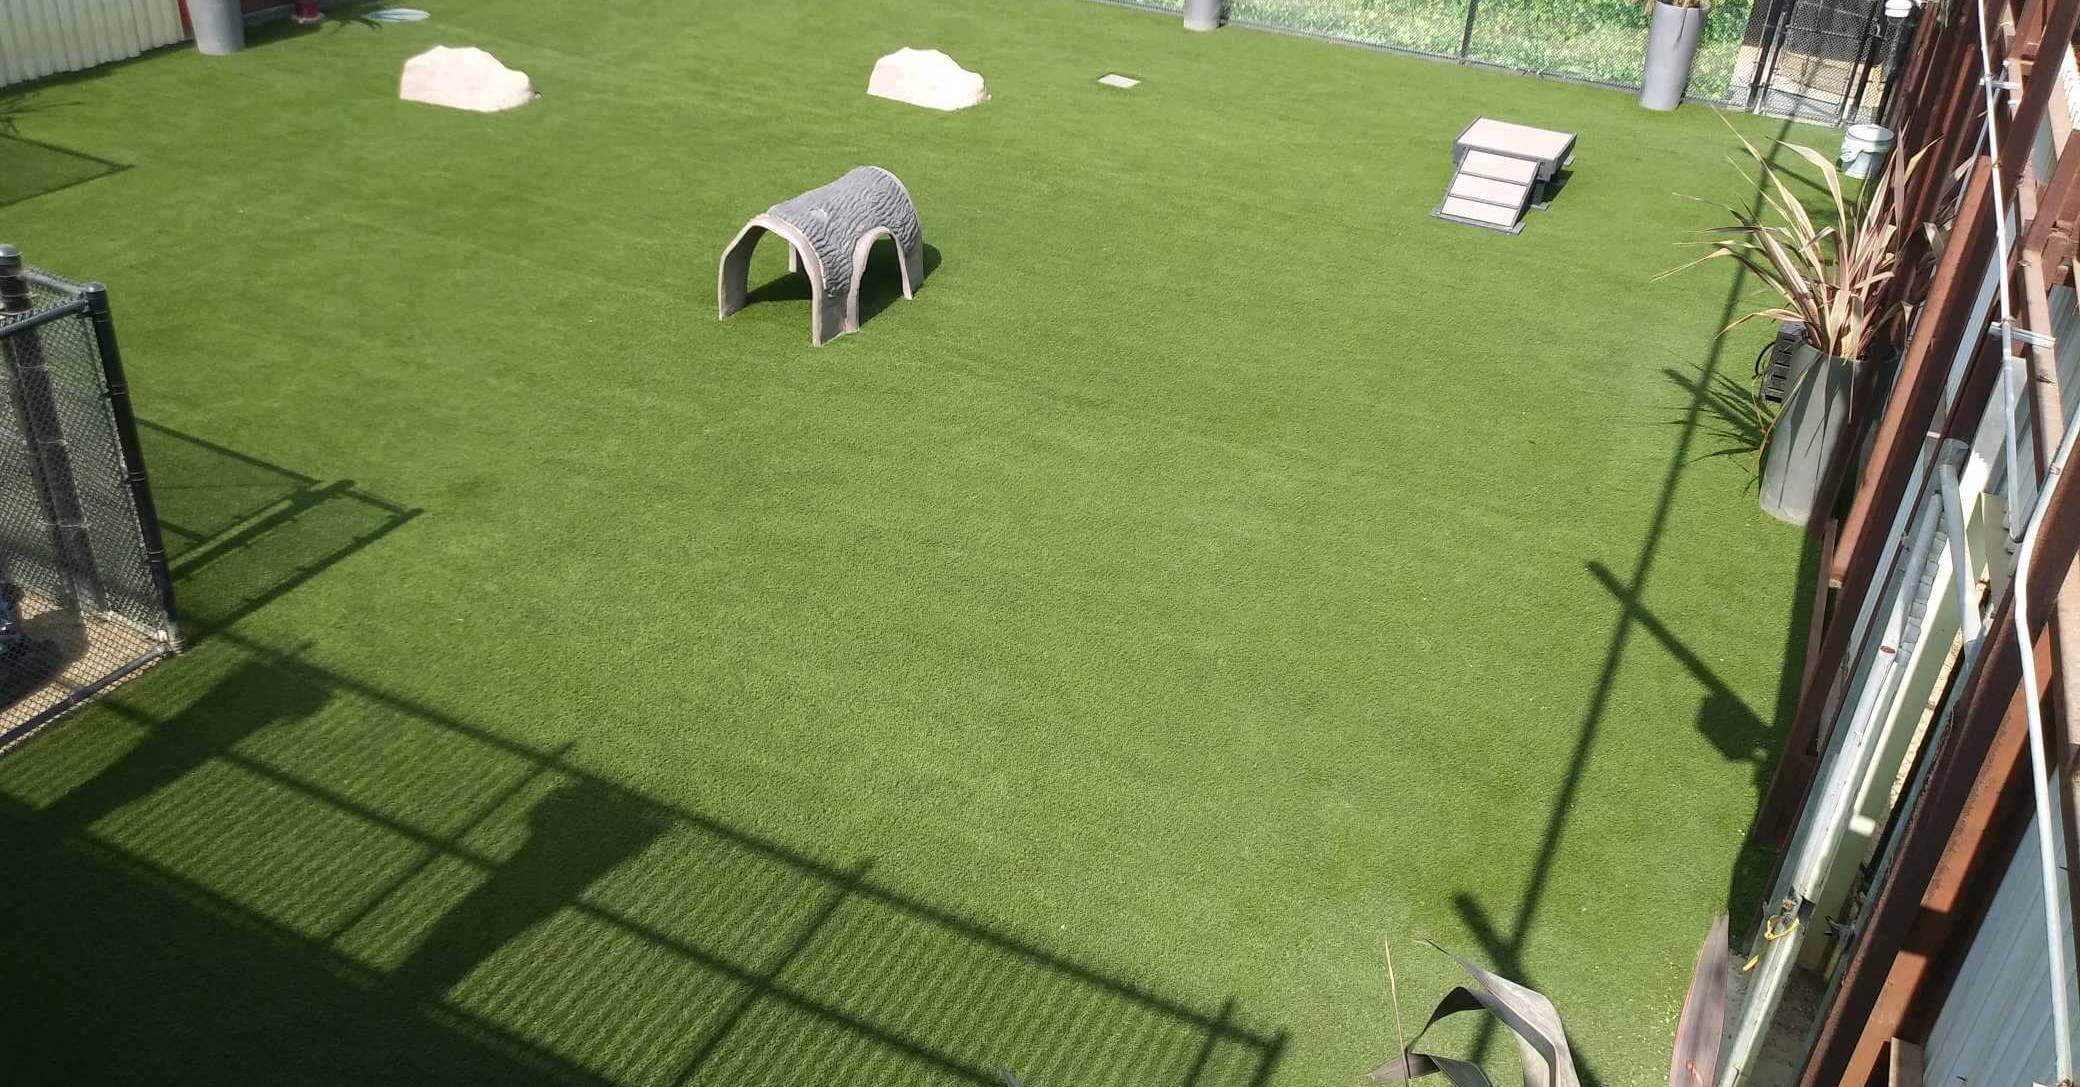 Drone shot of artificial grass dog park